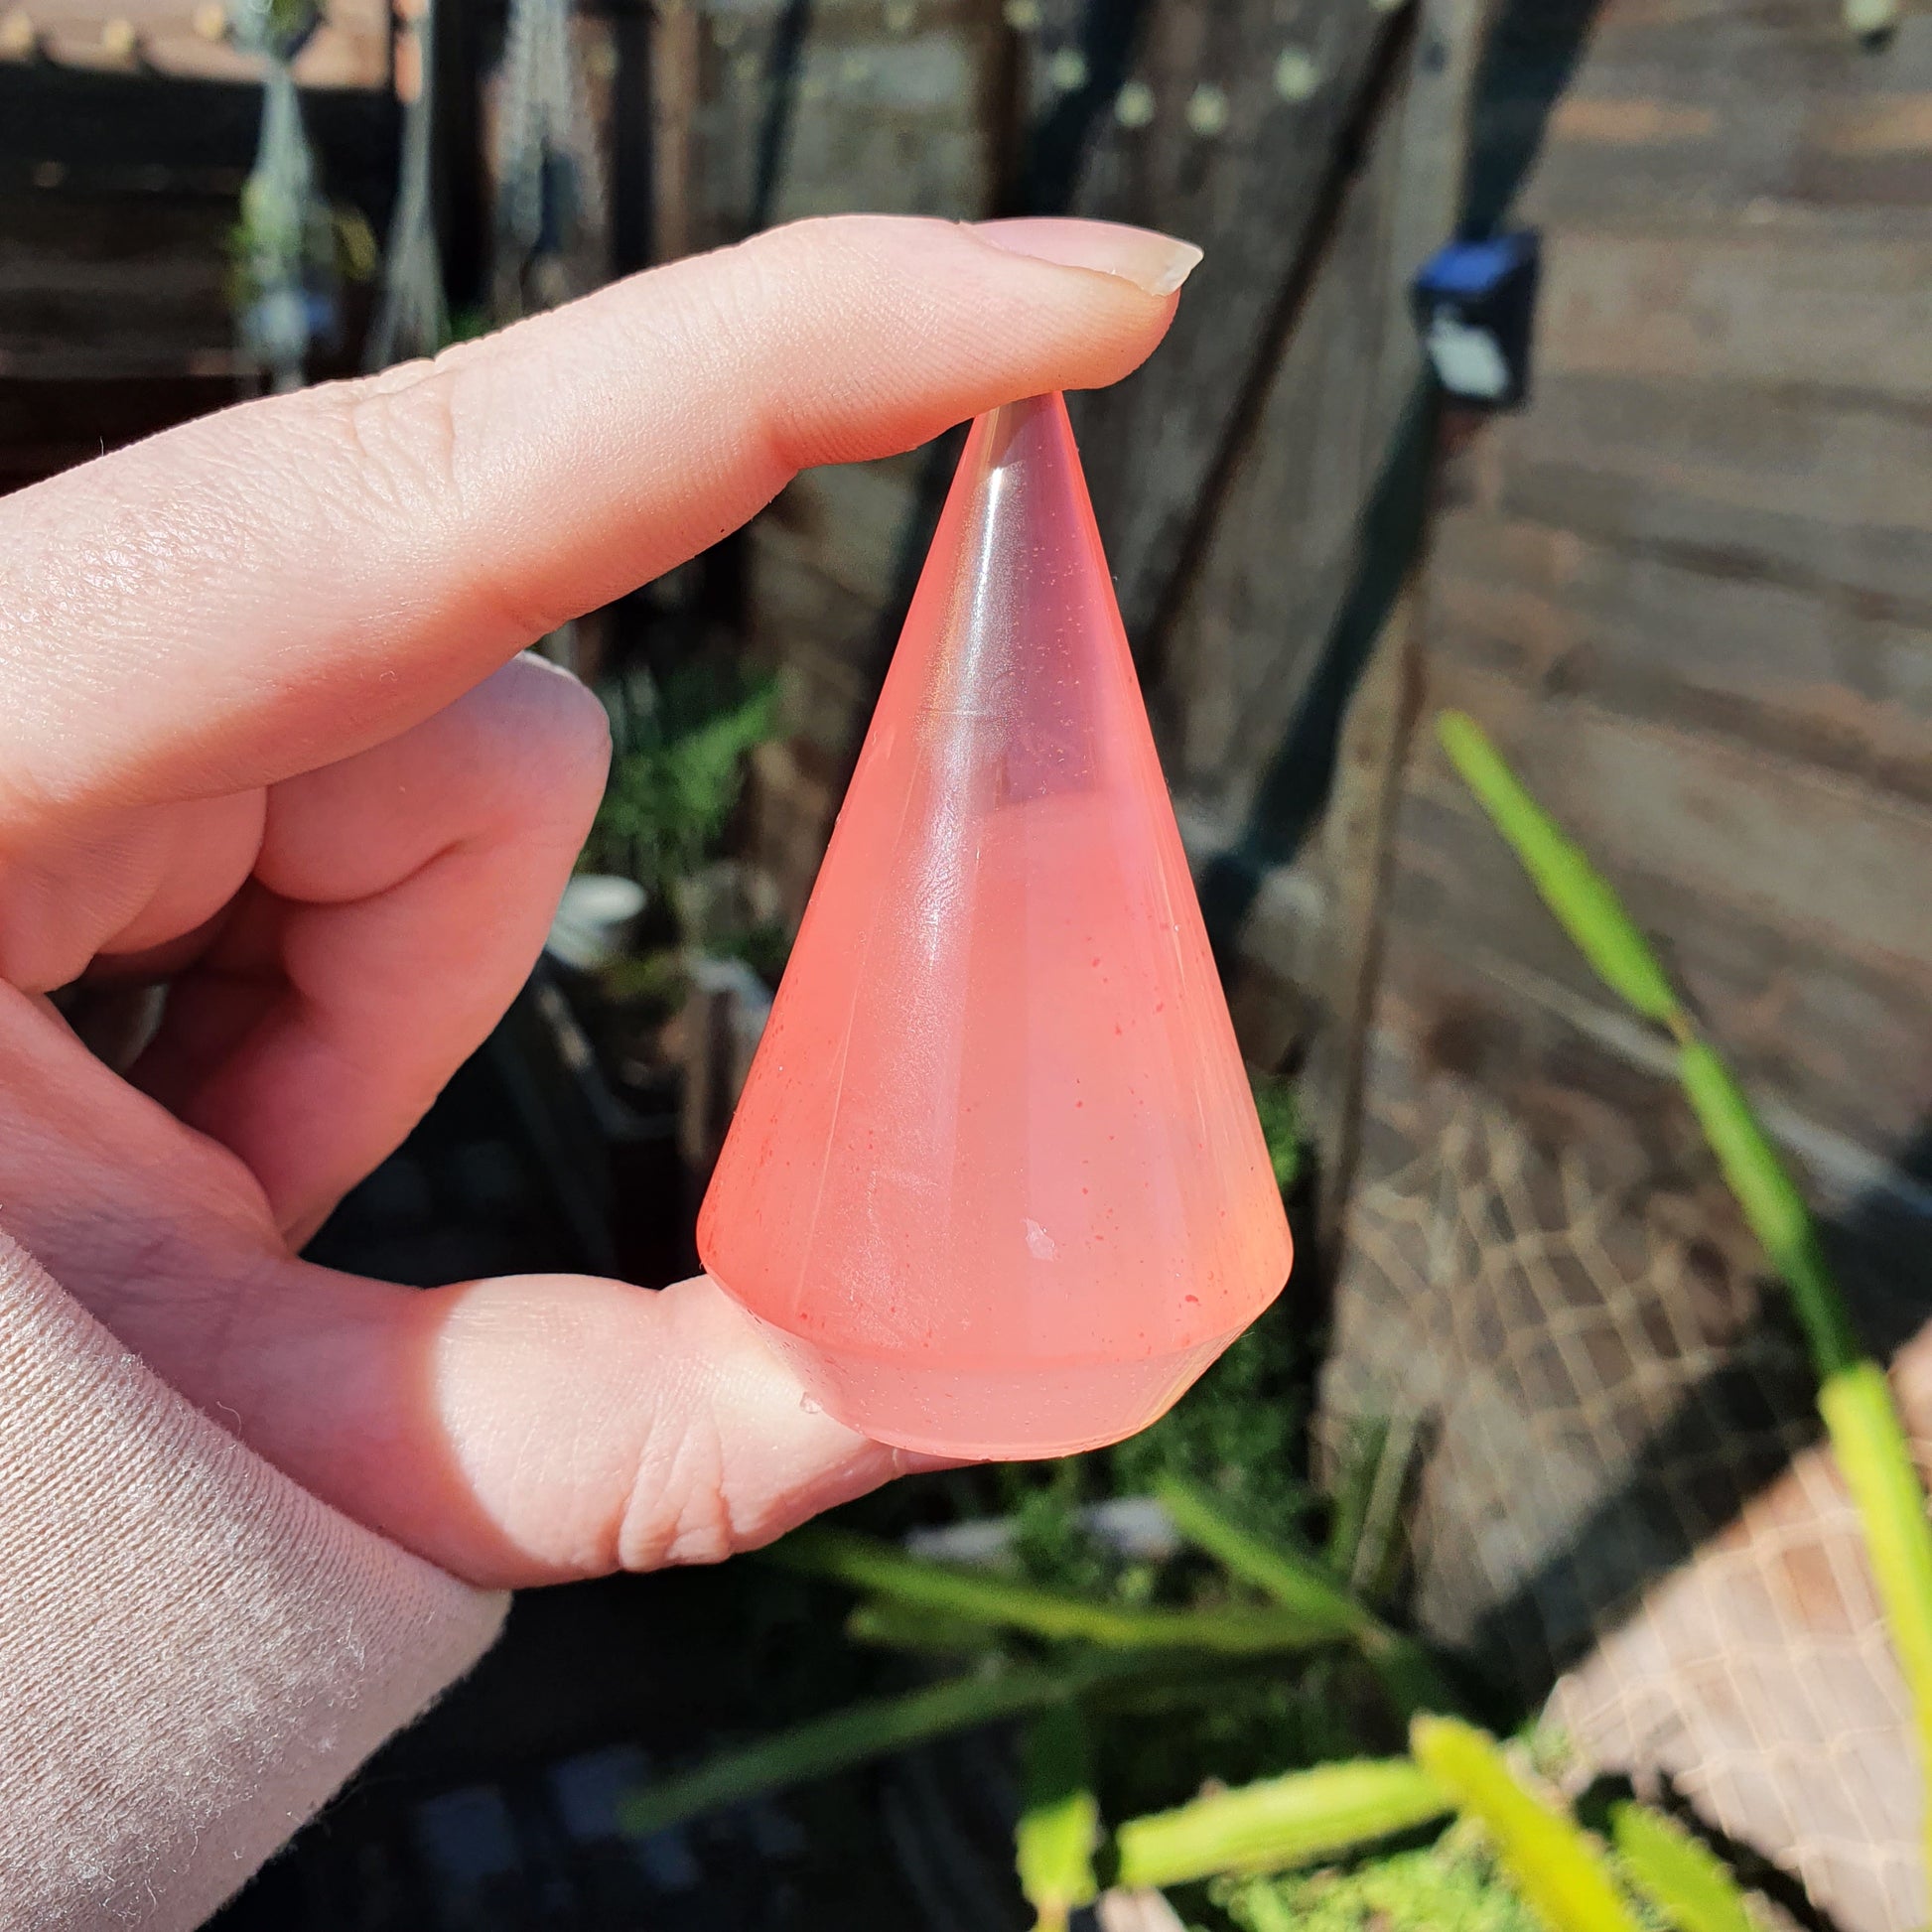 SolarTone Dye - Pink - Keipach